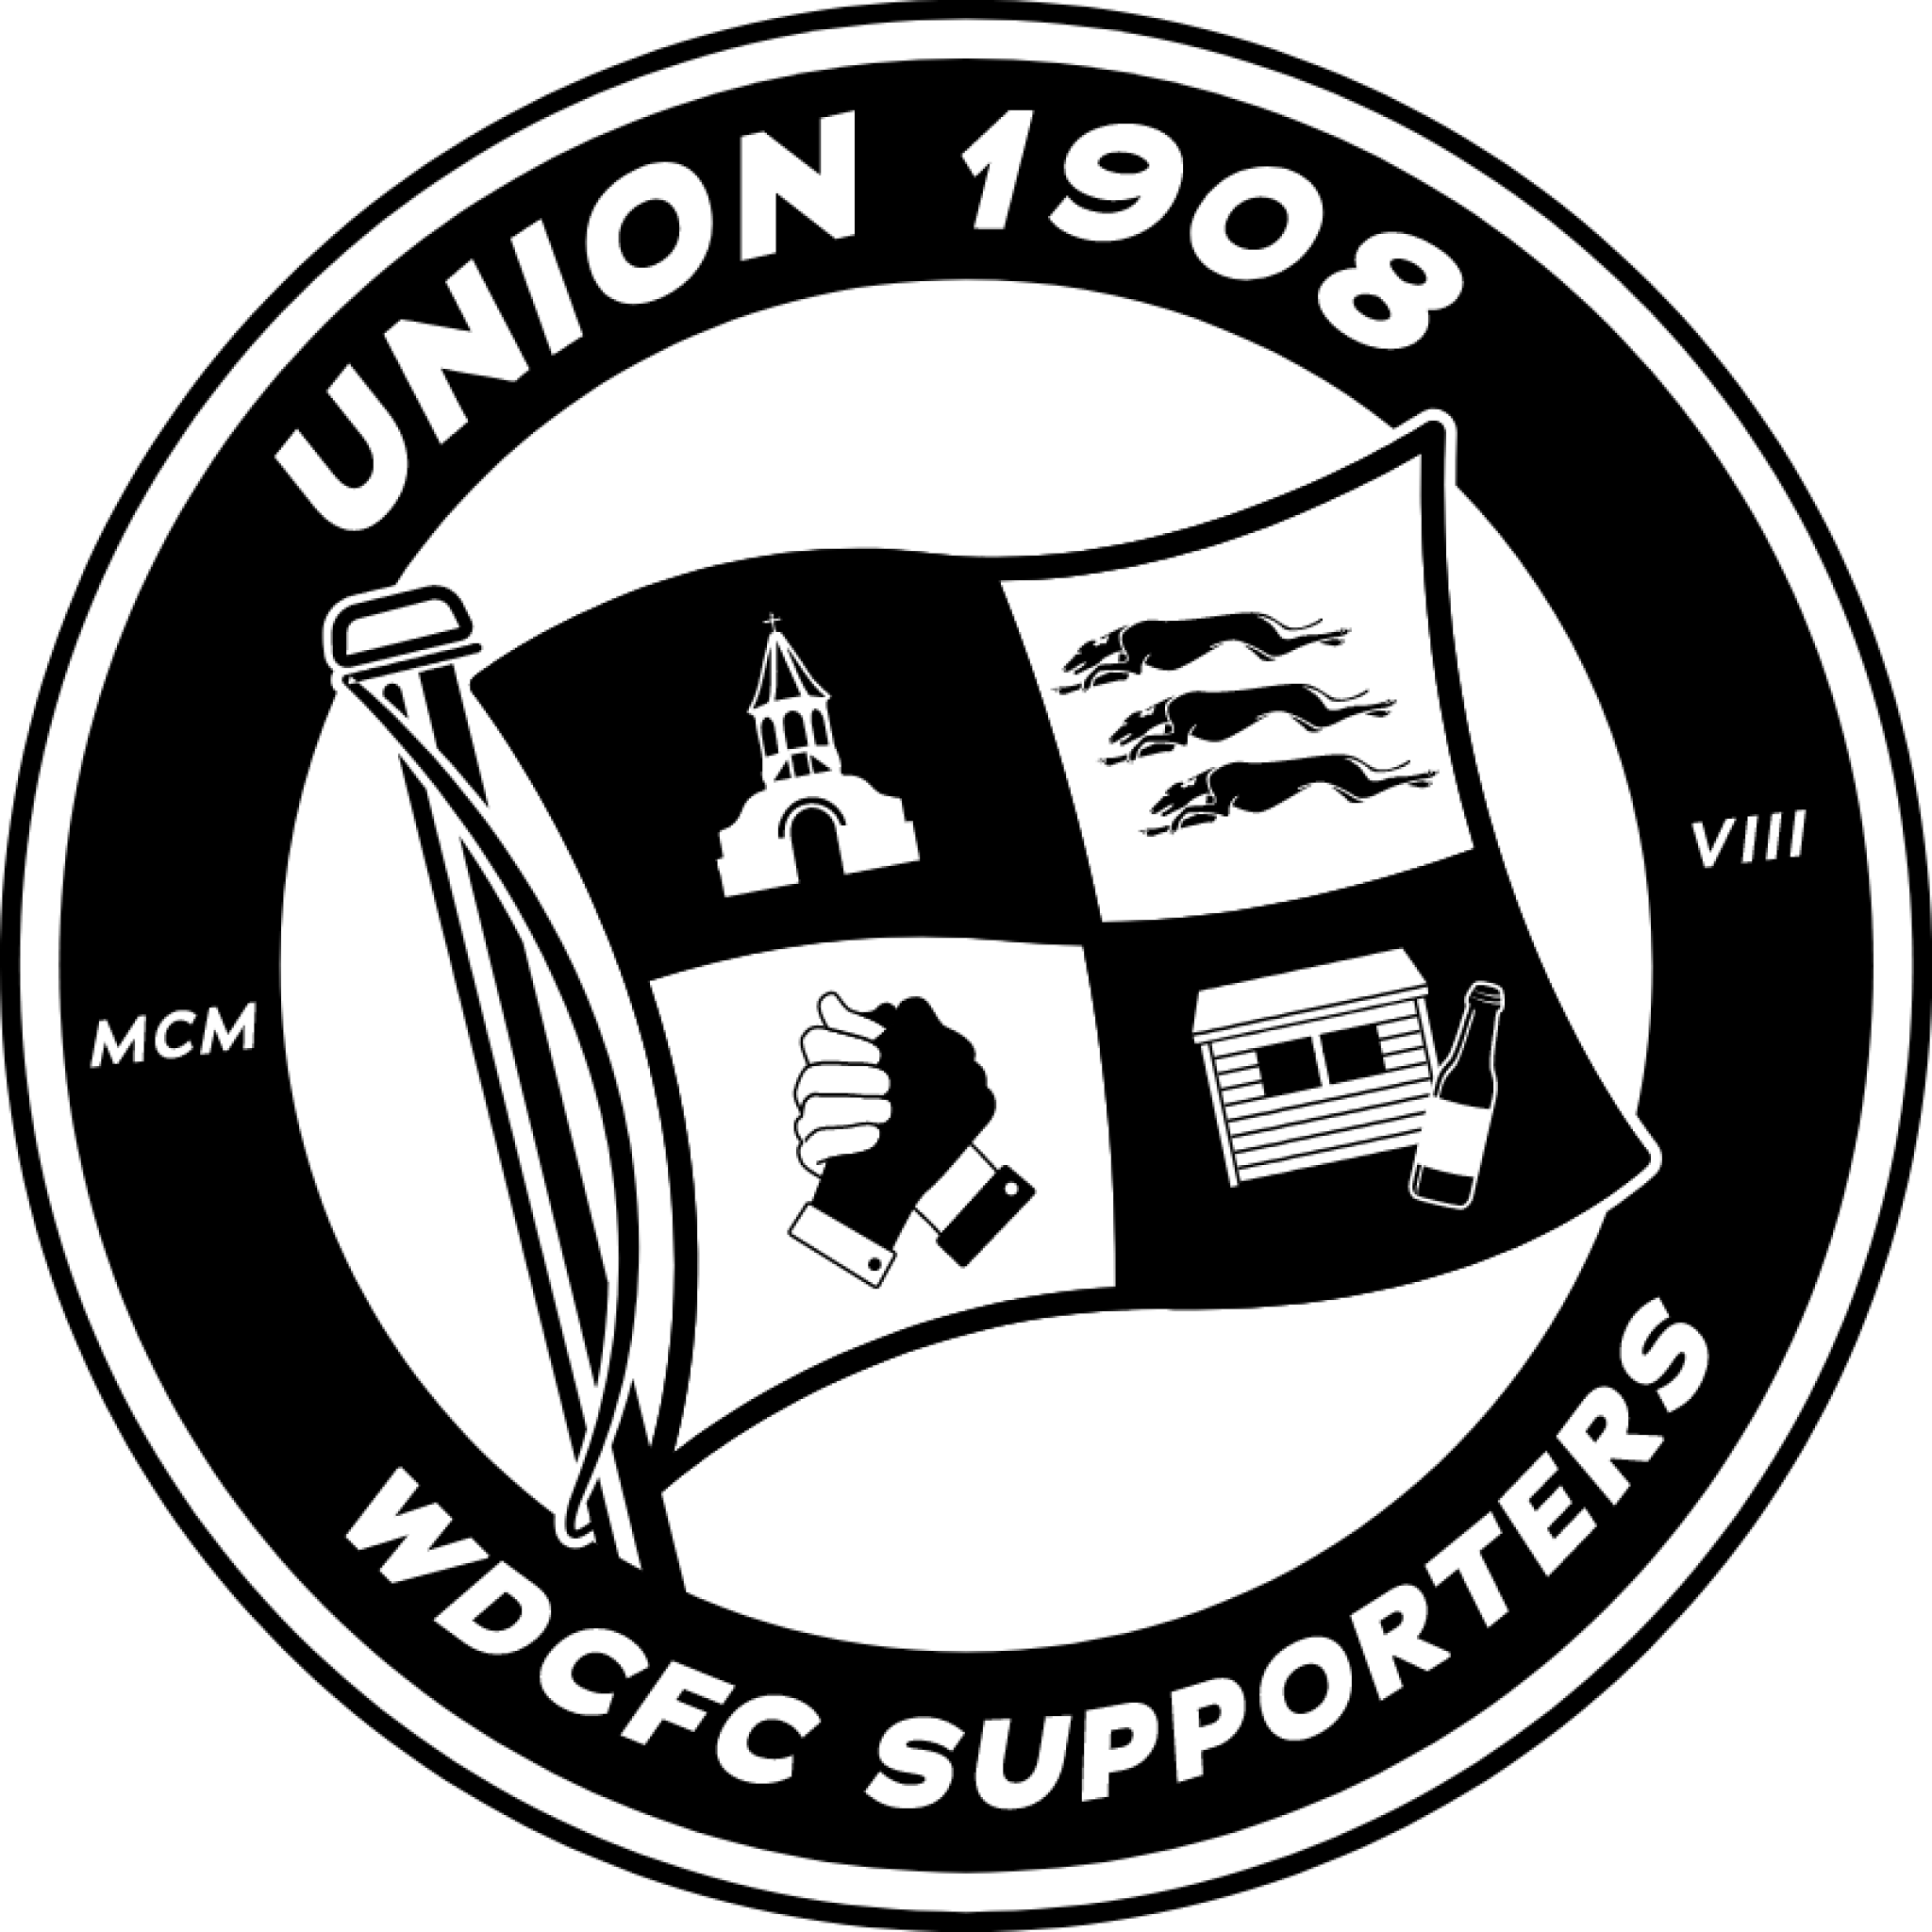 Union 1908 Badge final-ai.png